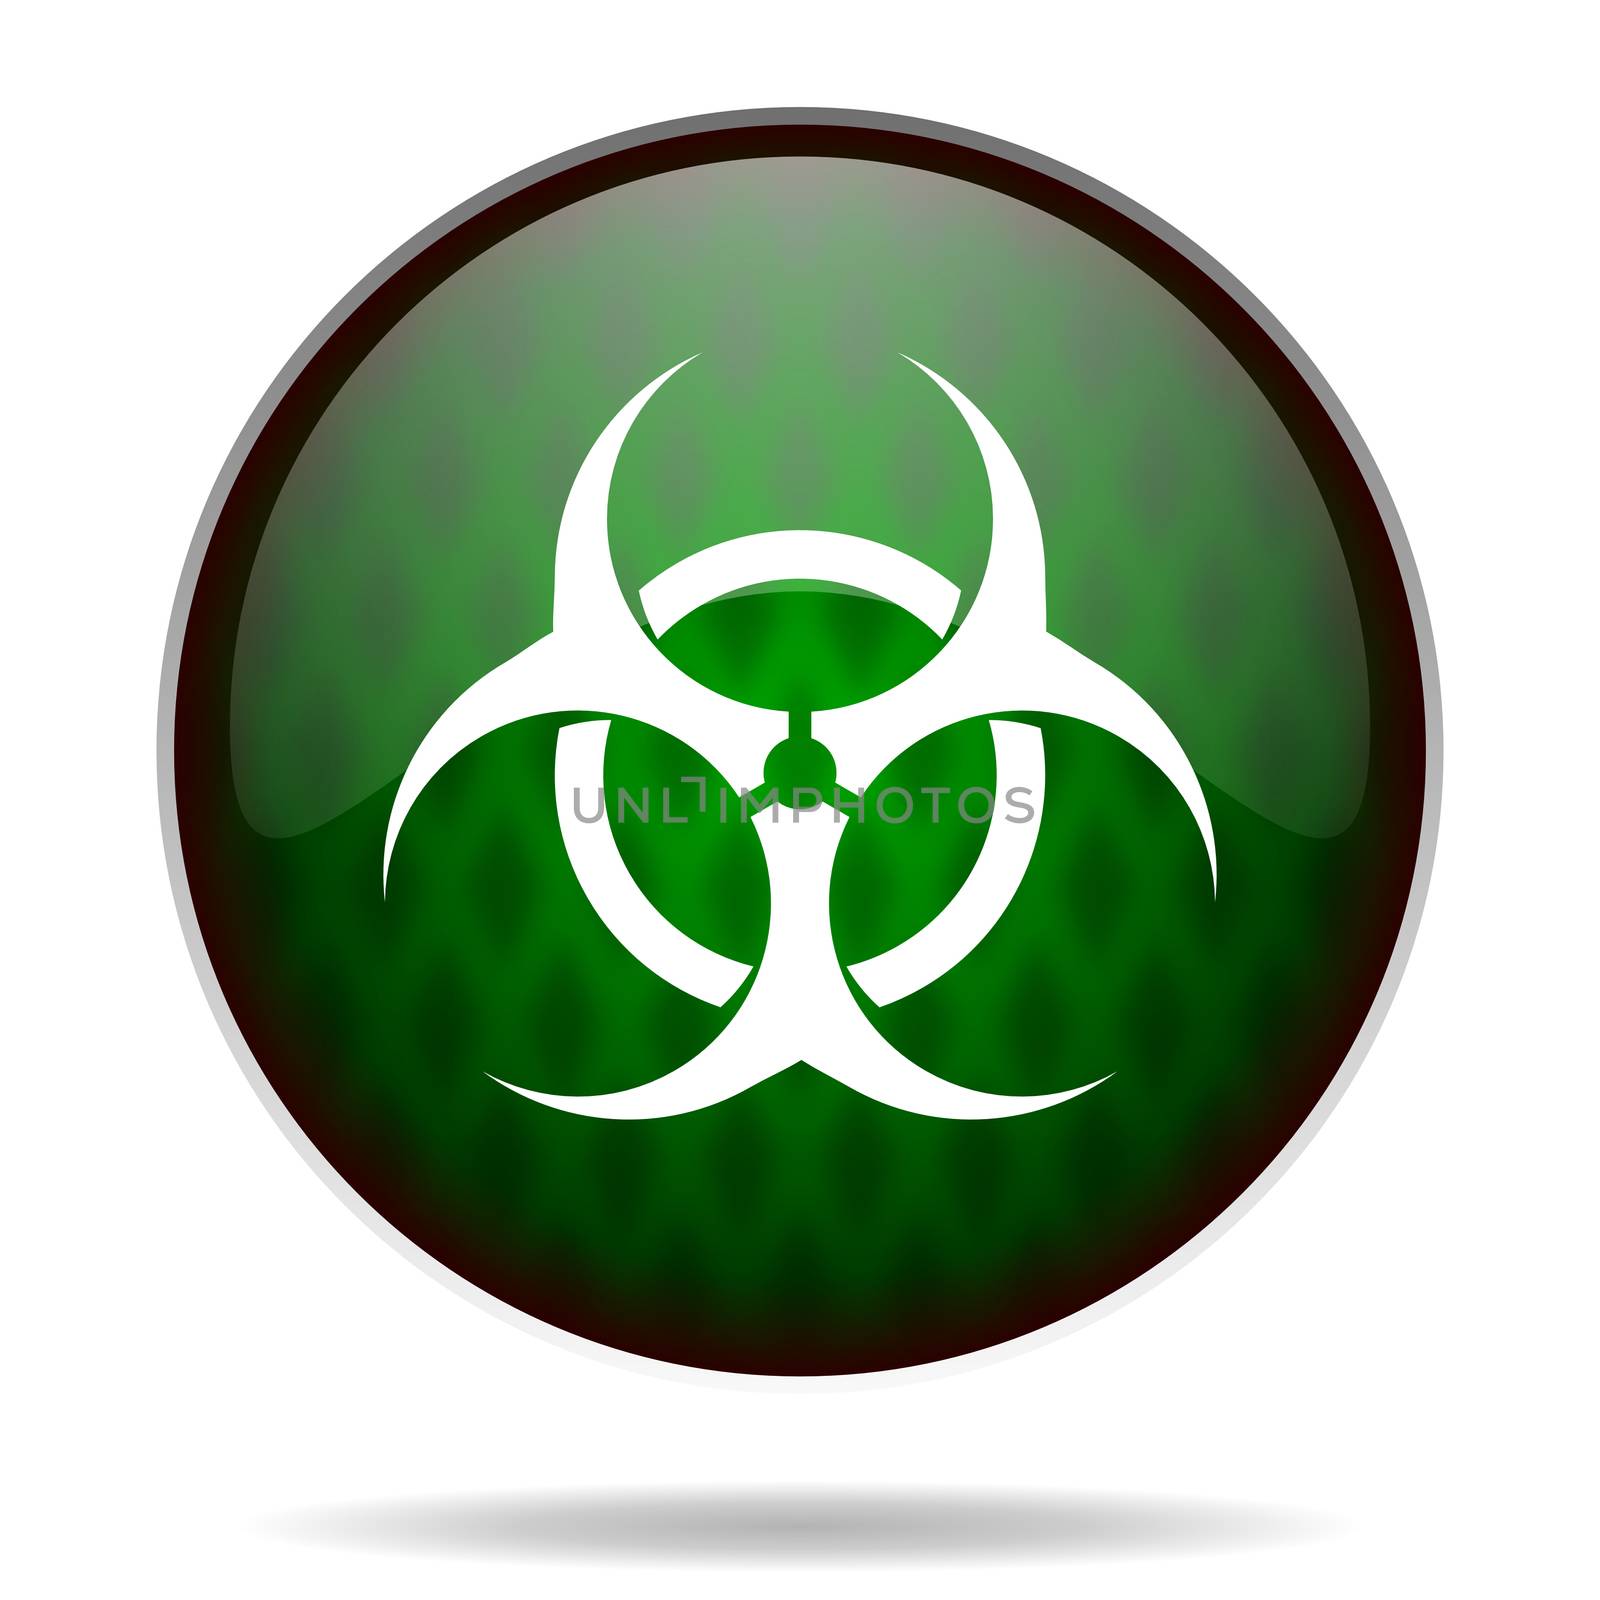 biohazard green internet icon